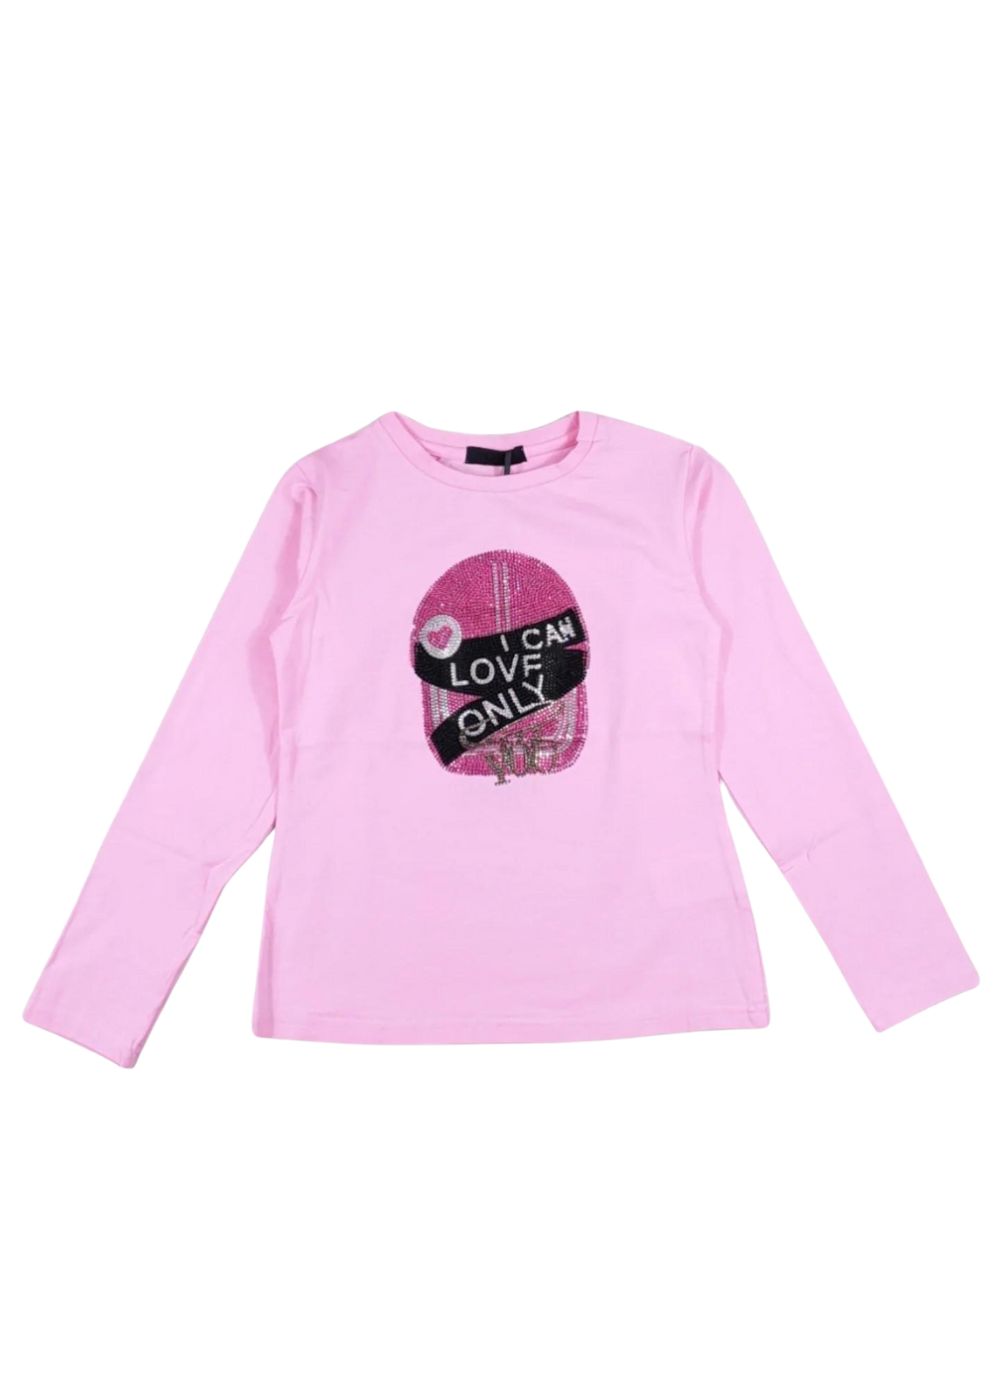 Featured image for “Fun & Fun T-Shirt Stampa Glitter”